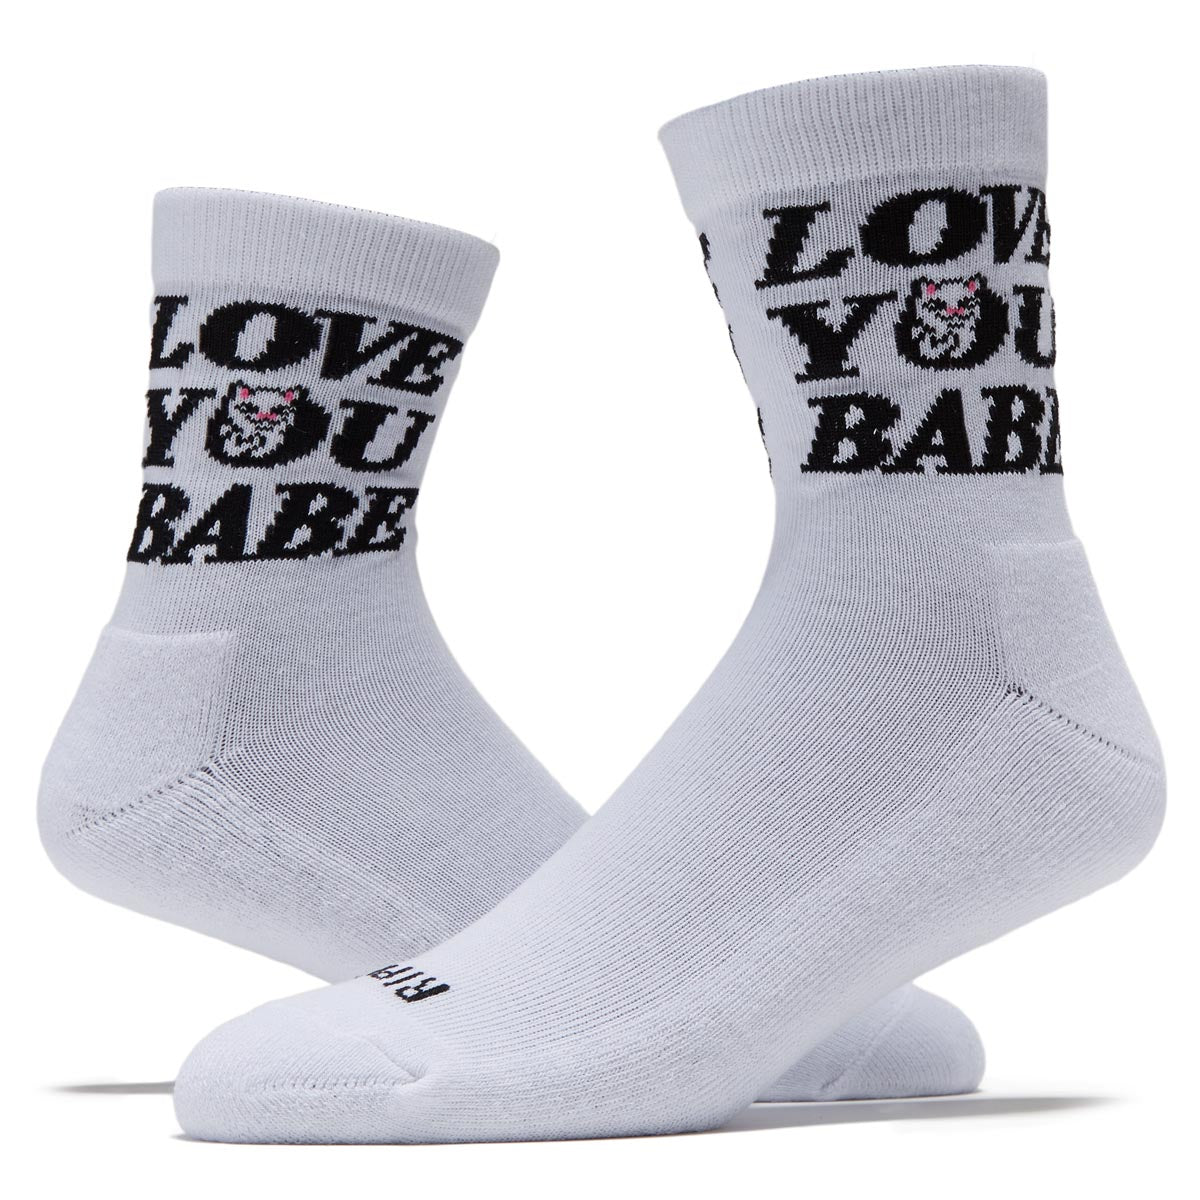 RIPNDIP Love You Mid Socks - White image 2